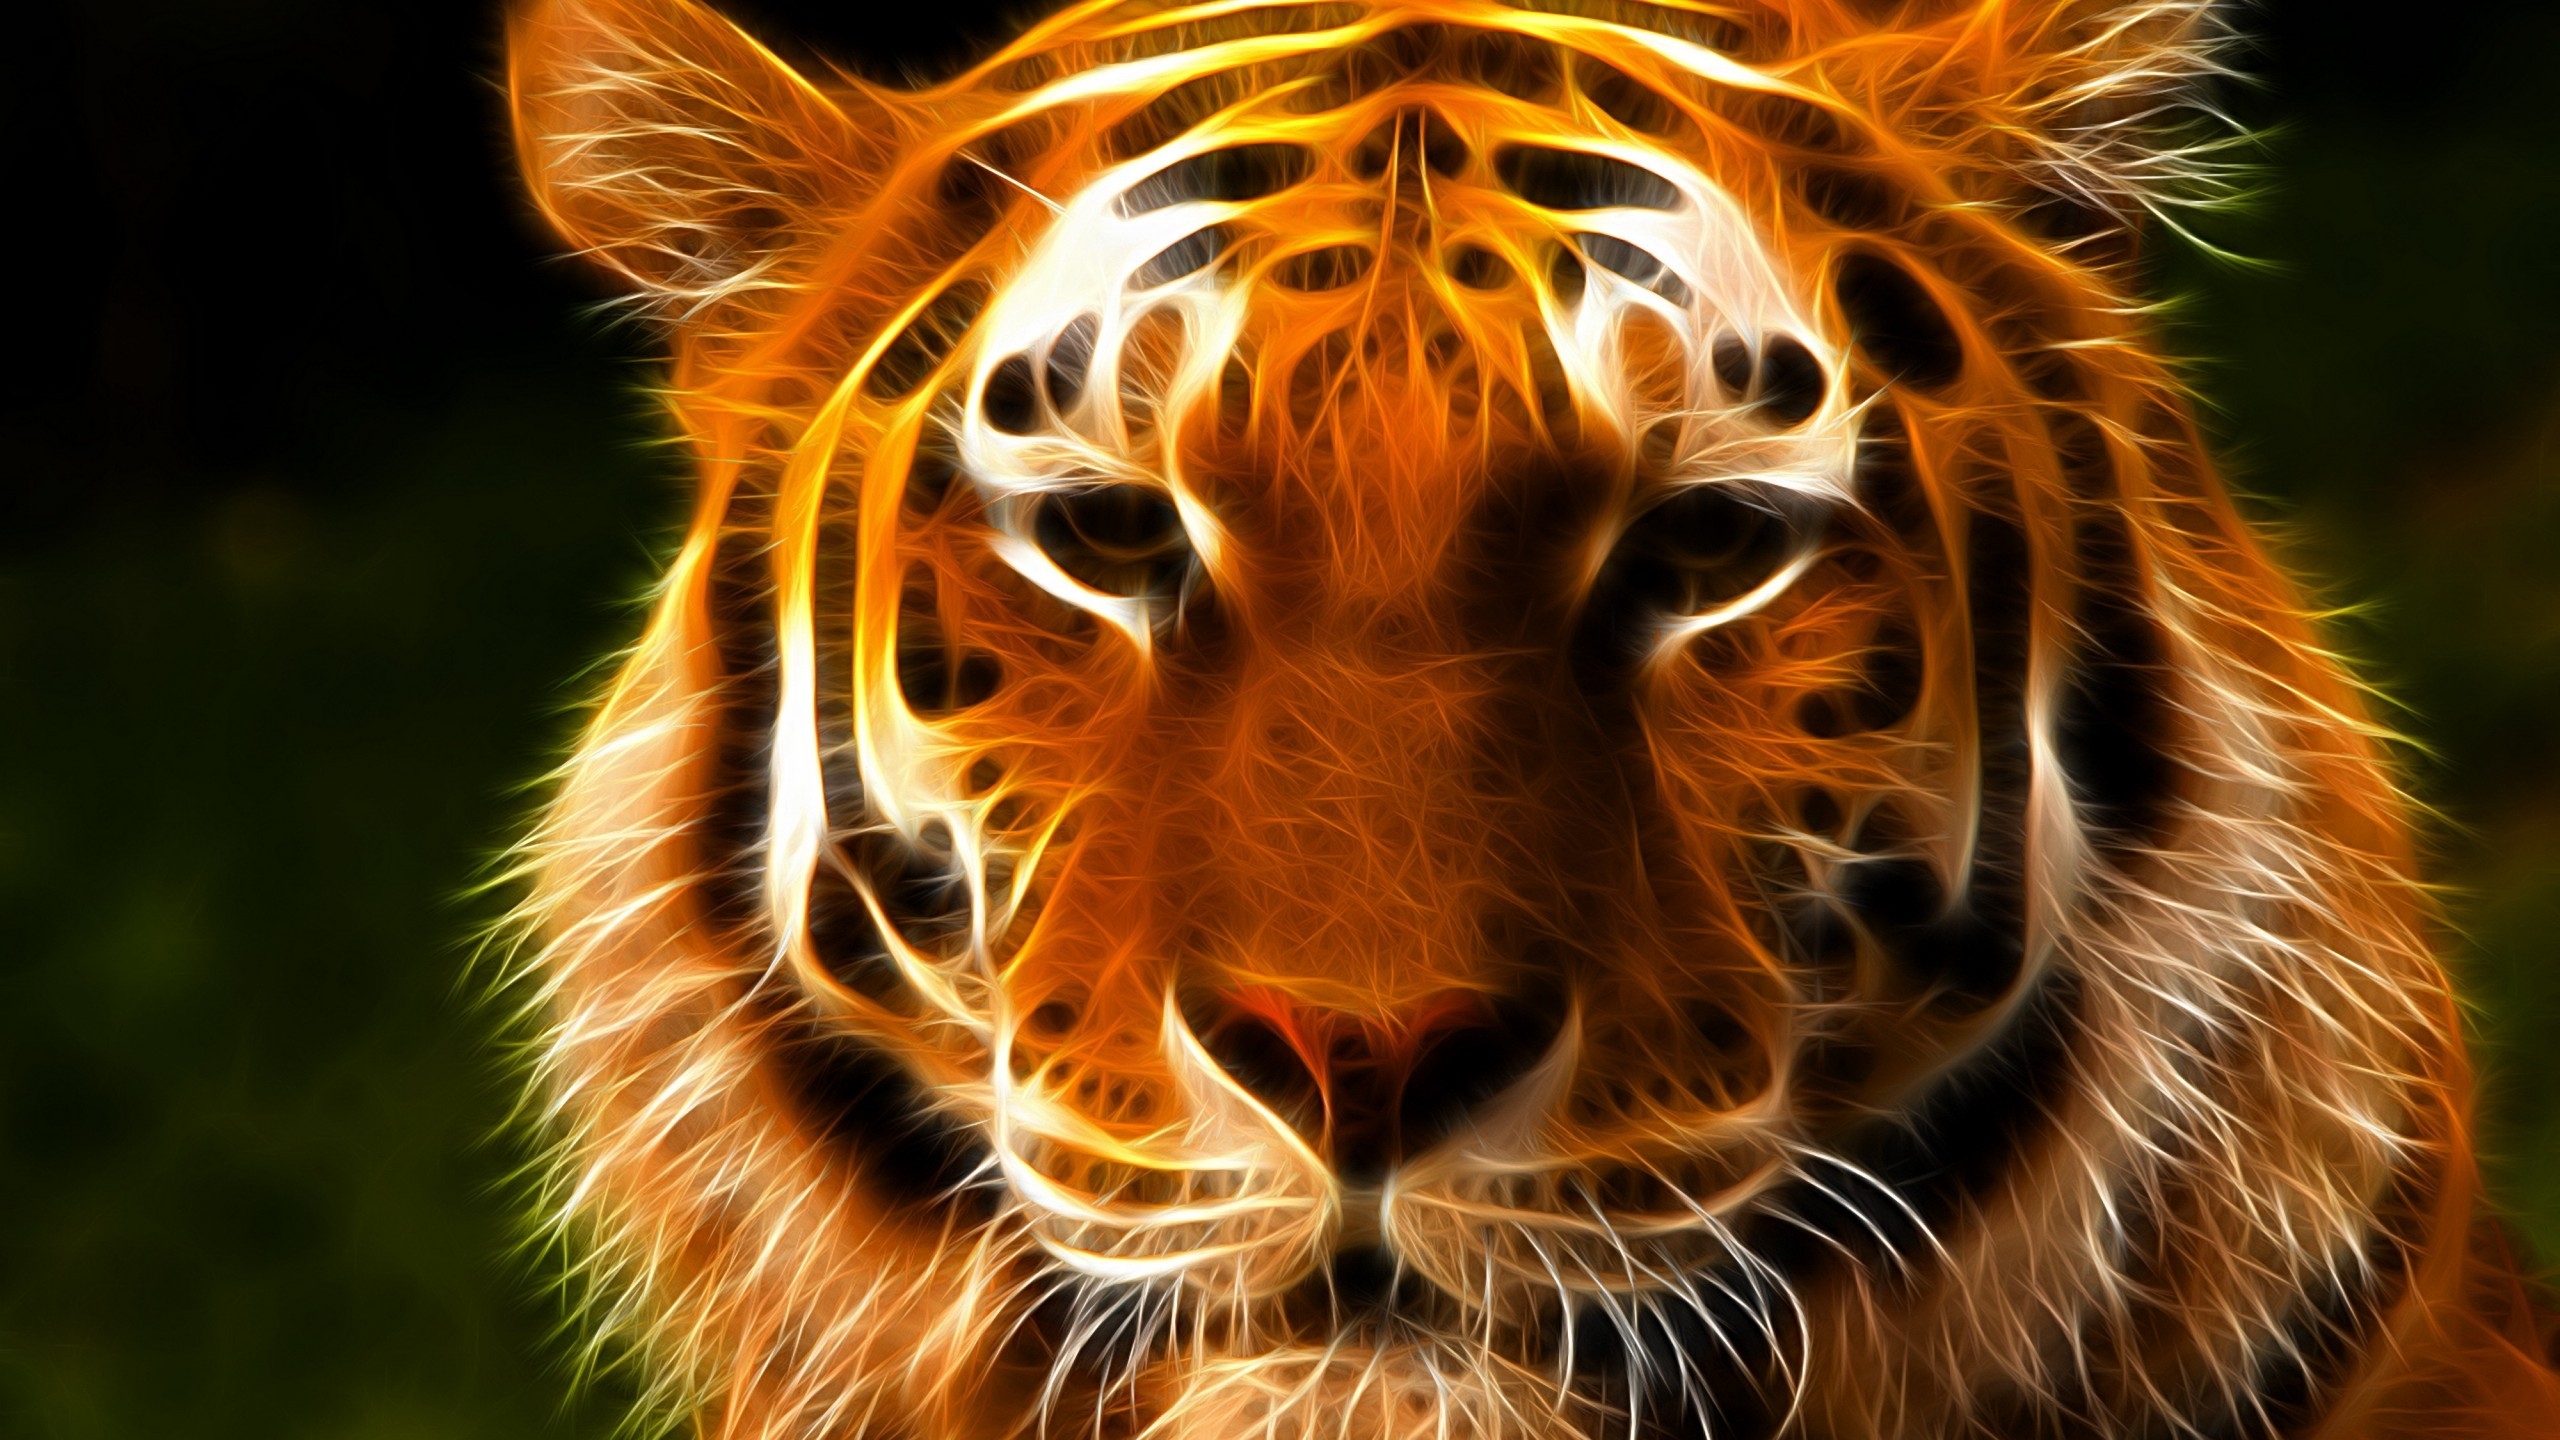 Tiger Face Art for 2560x1440 HDTV resolution